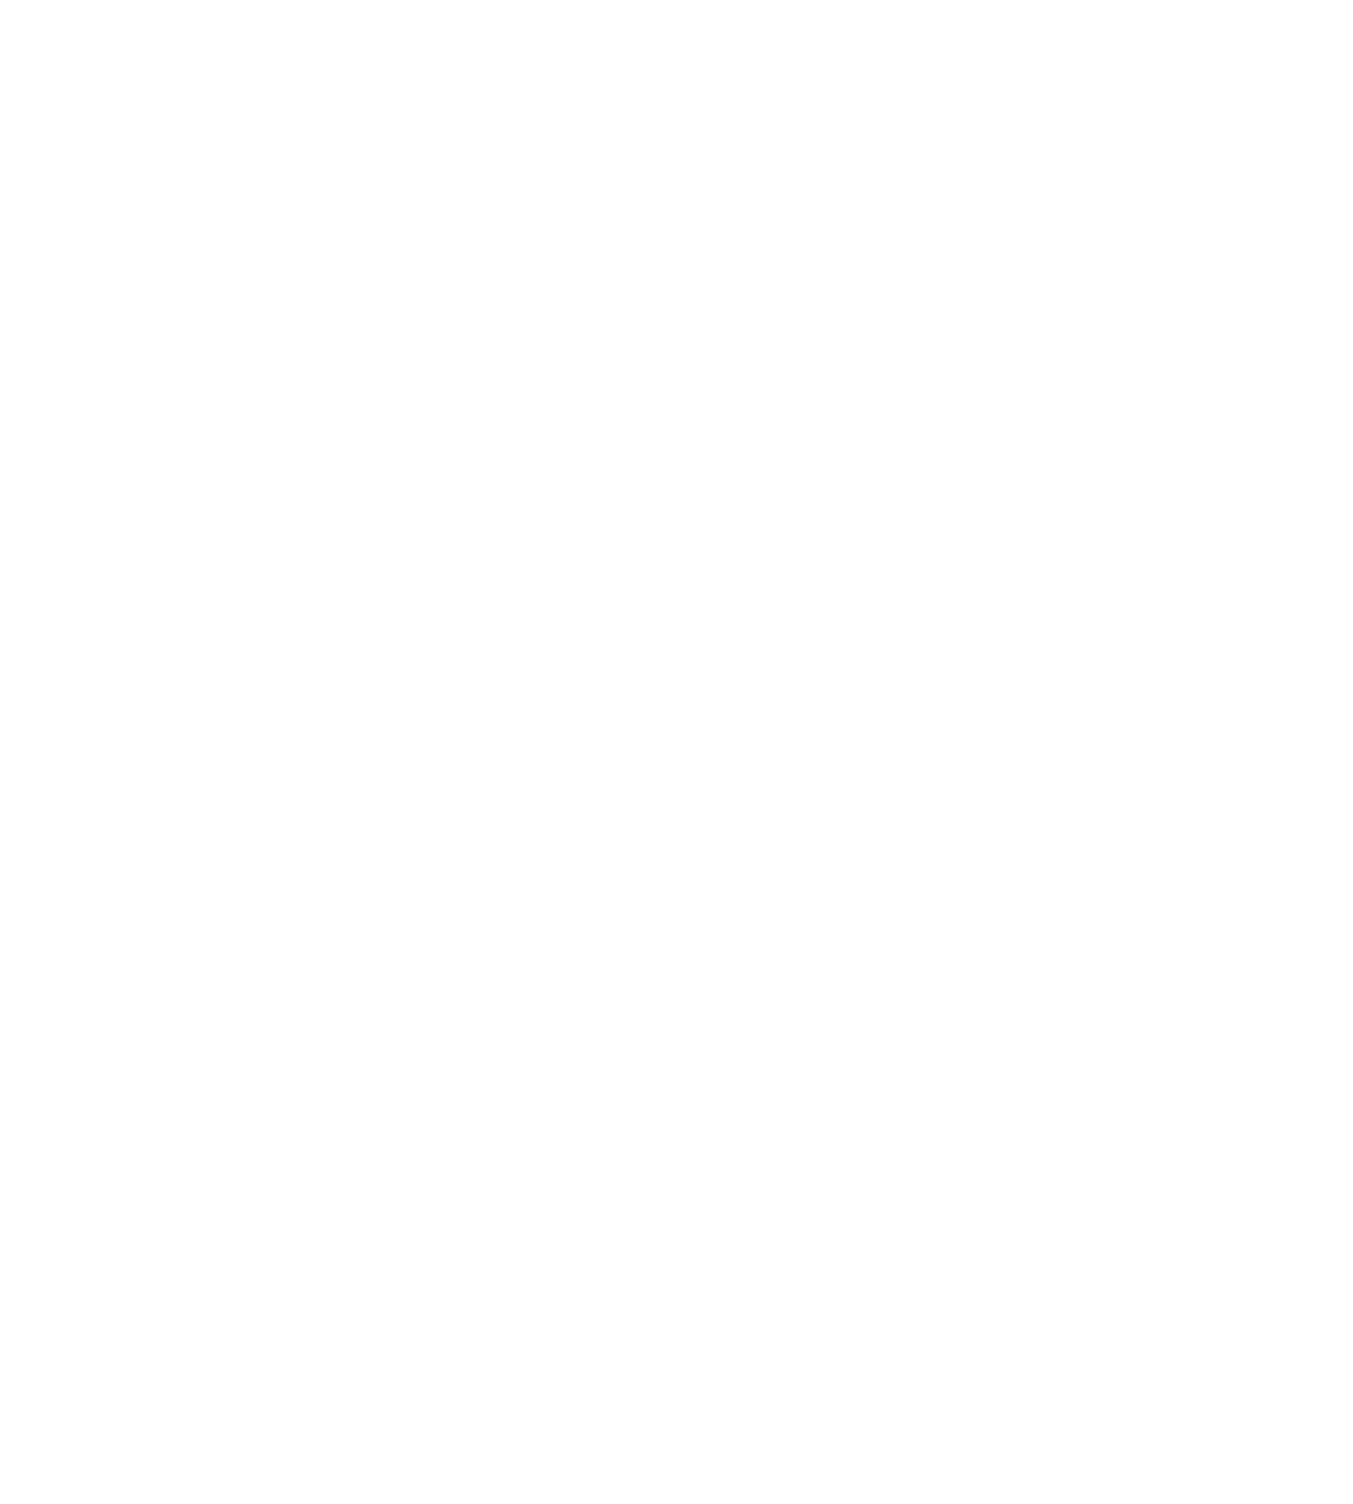 Nyxoah logo for dark backgrounds (transparent PNG)